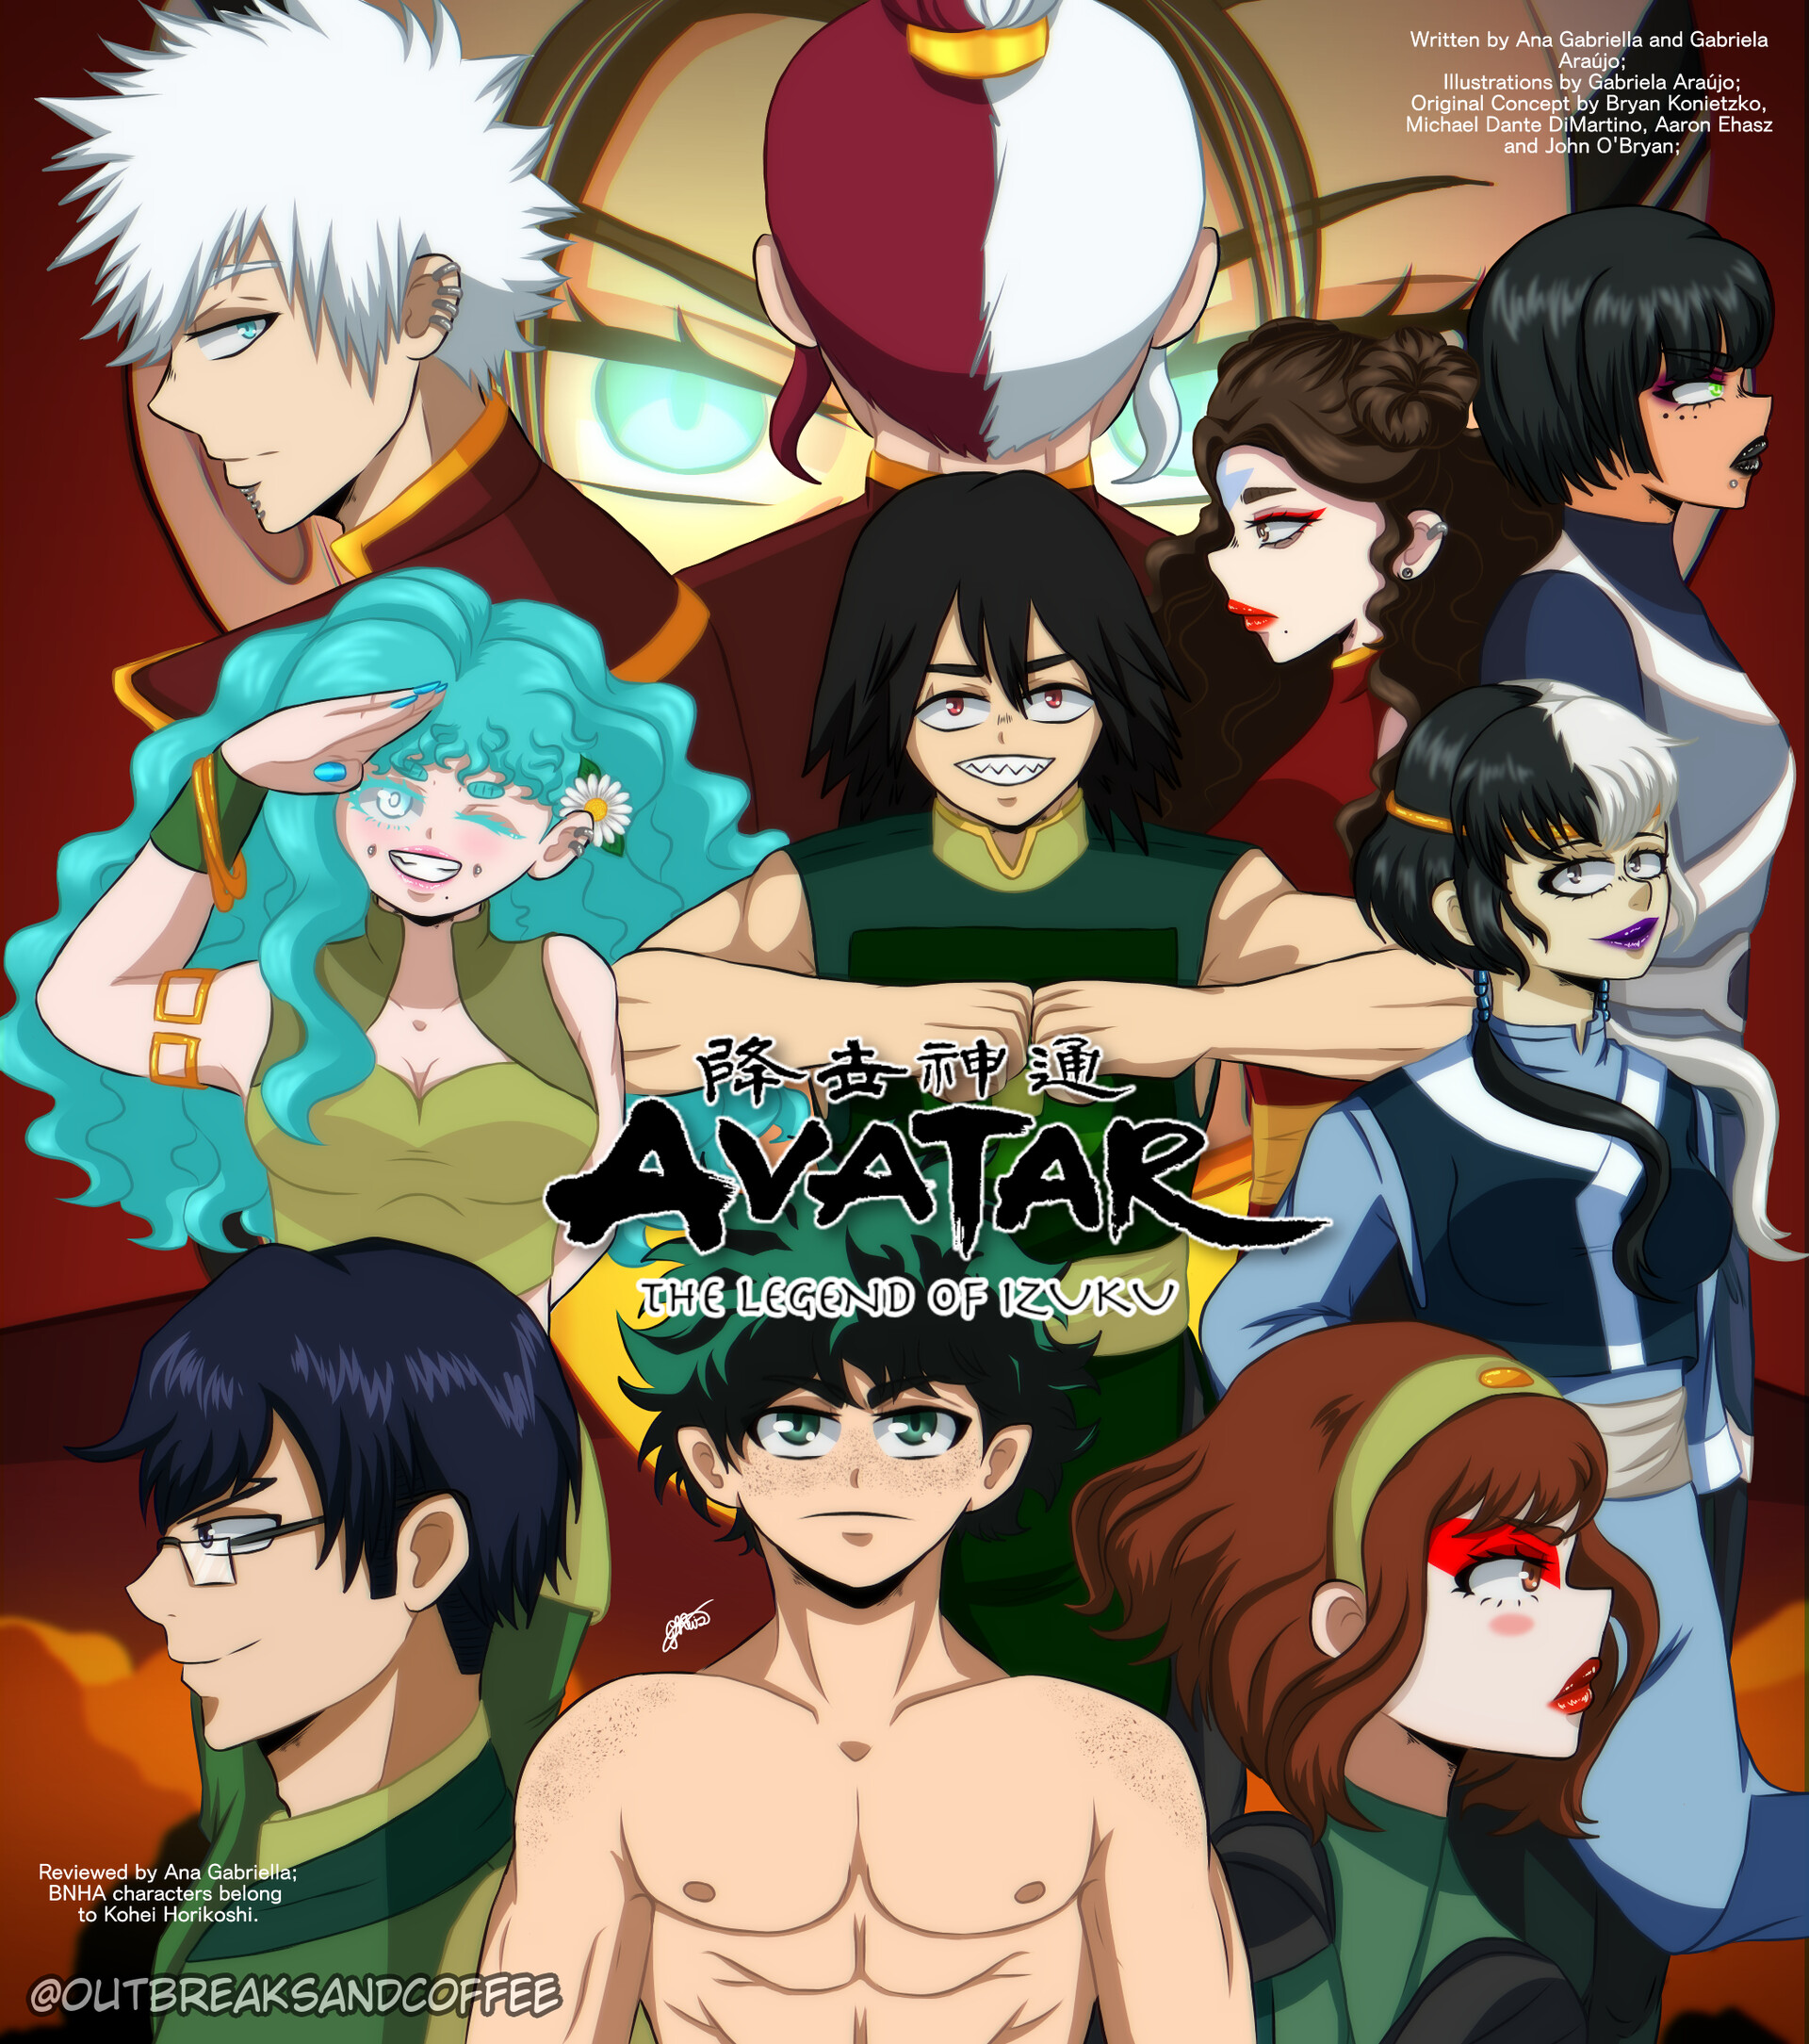 ArtStation - Avatar, The Legend of Izuku